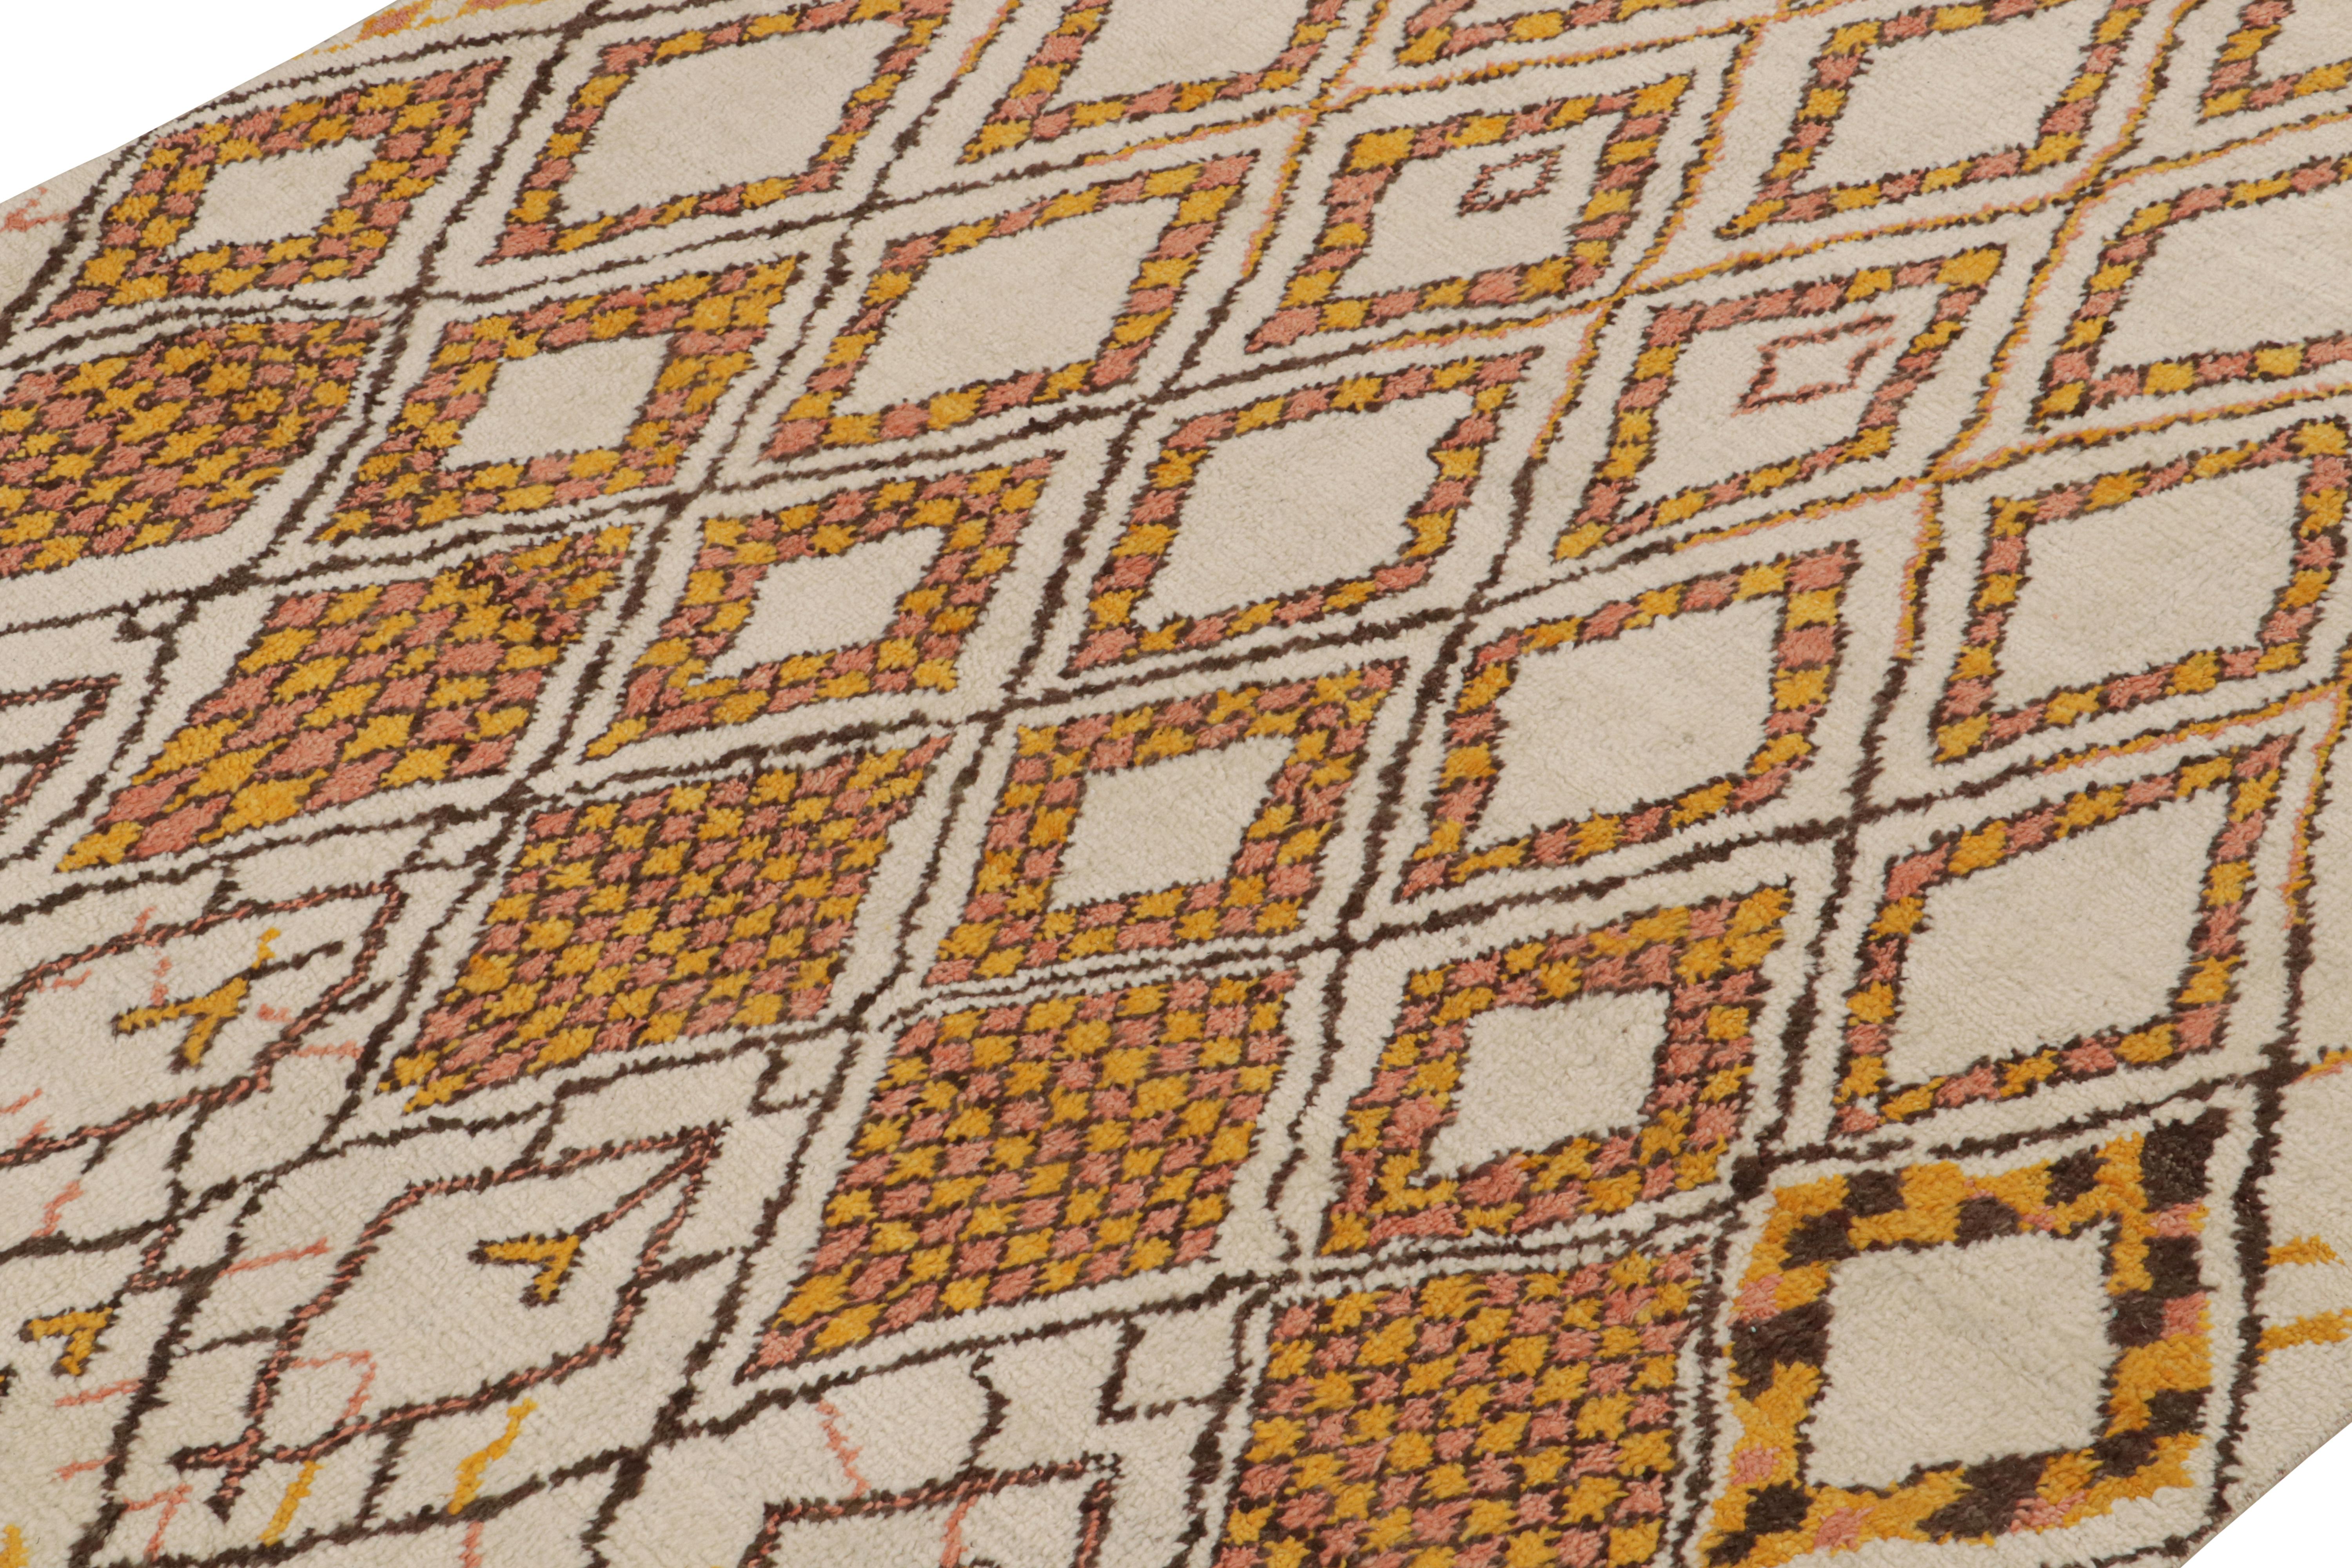 Indian Rug & Kilim’s Moroccan Style Rug in Beige-Brown & Orange Geometric Patterns For Sale